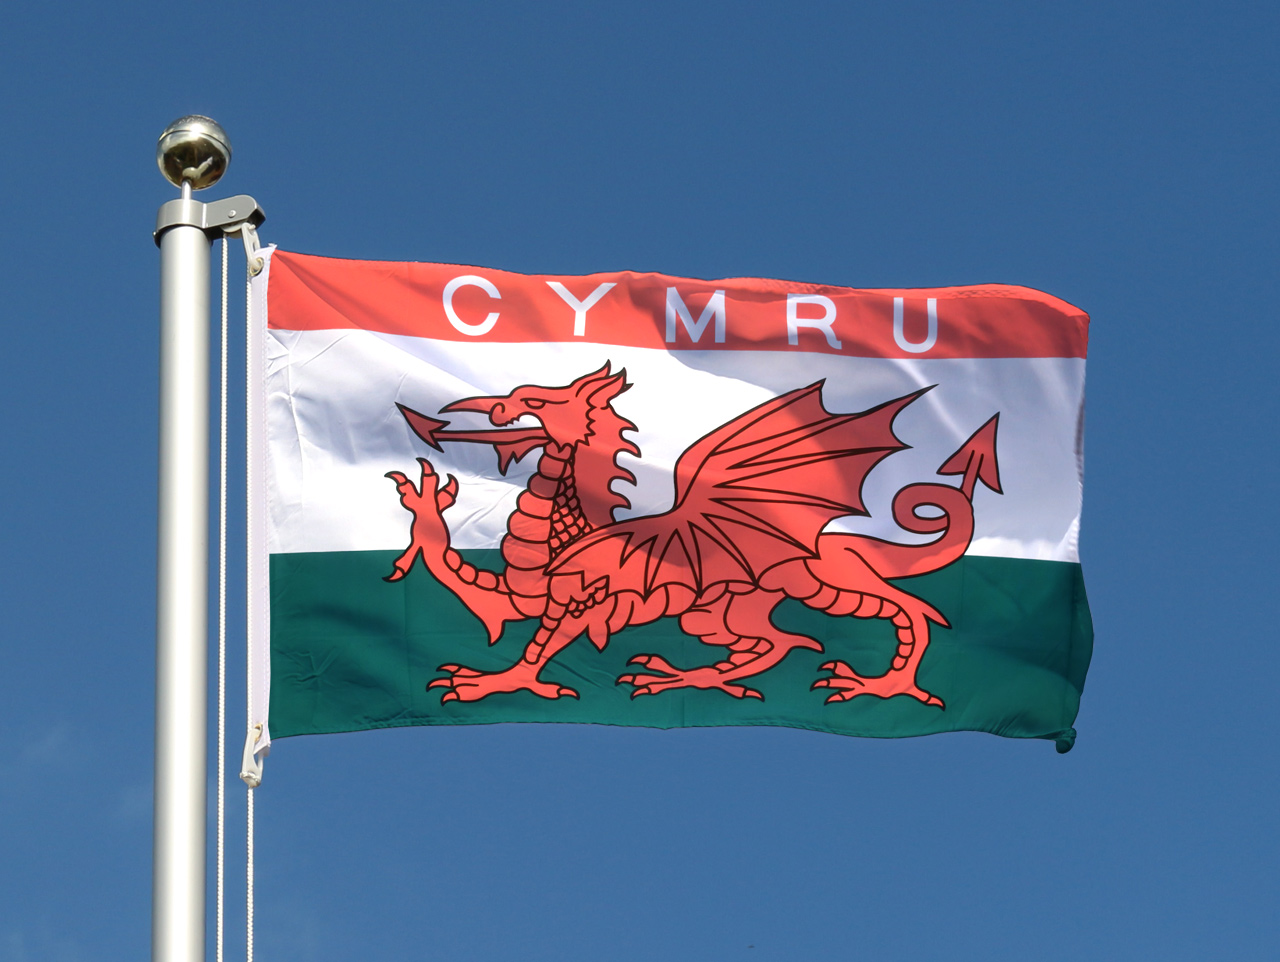 Welsh. Cymru Wales. Национальный флаг Уэльса. Уэльский флаг. Флаг Welsh.